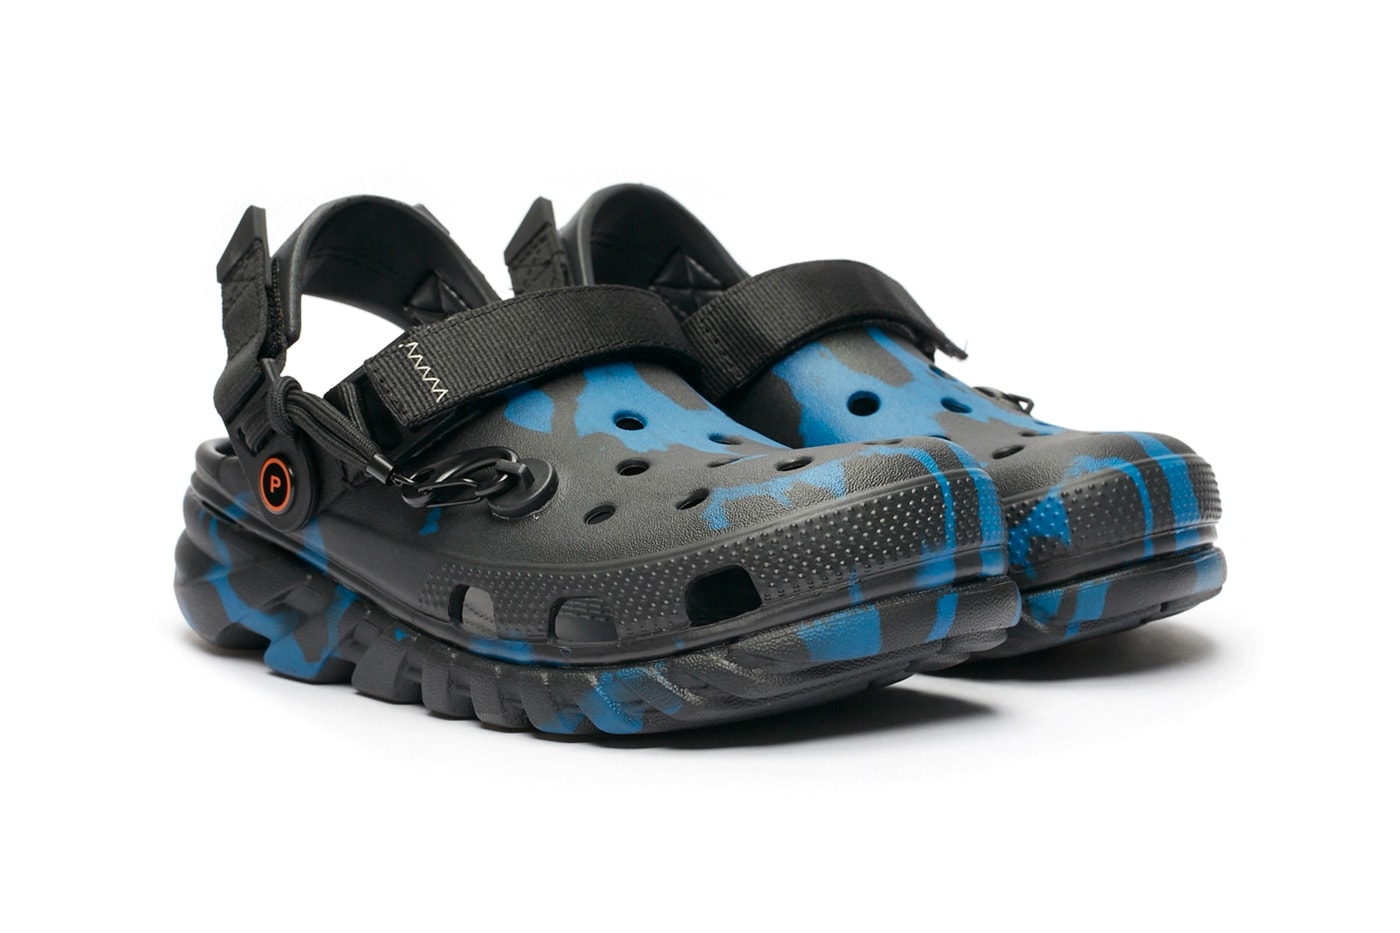 Post Malone x Crocs Duet Max Clog Release  Crocs footwear Posty Camo Clogs Foam comfort 